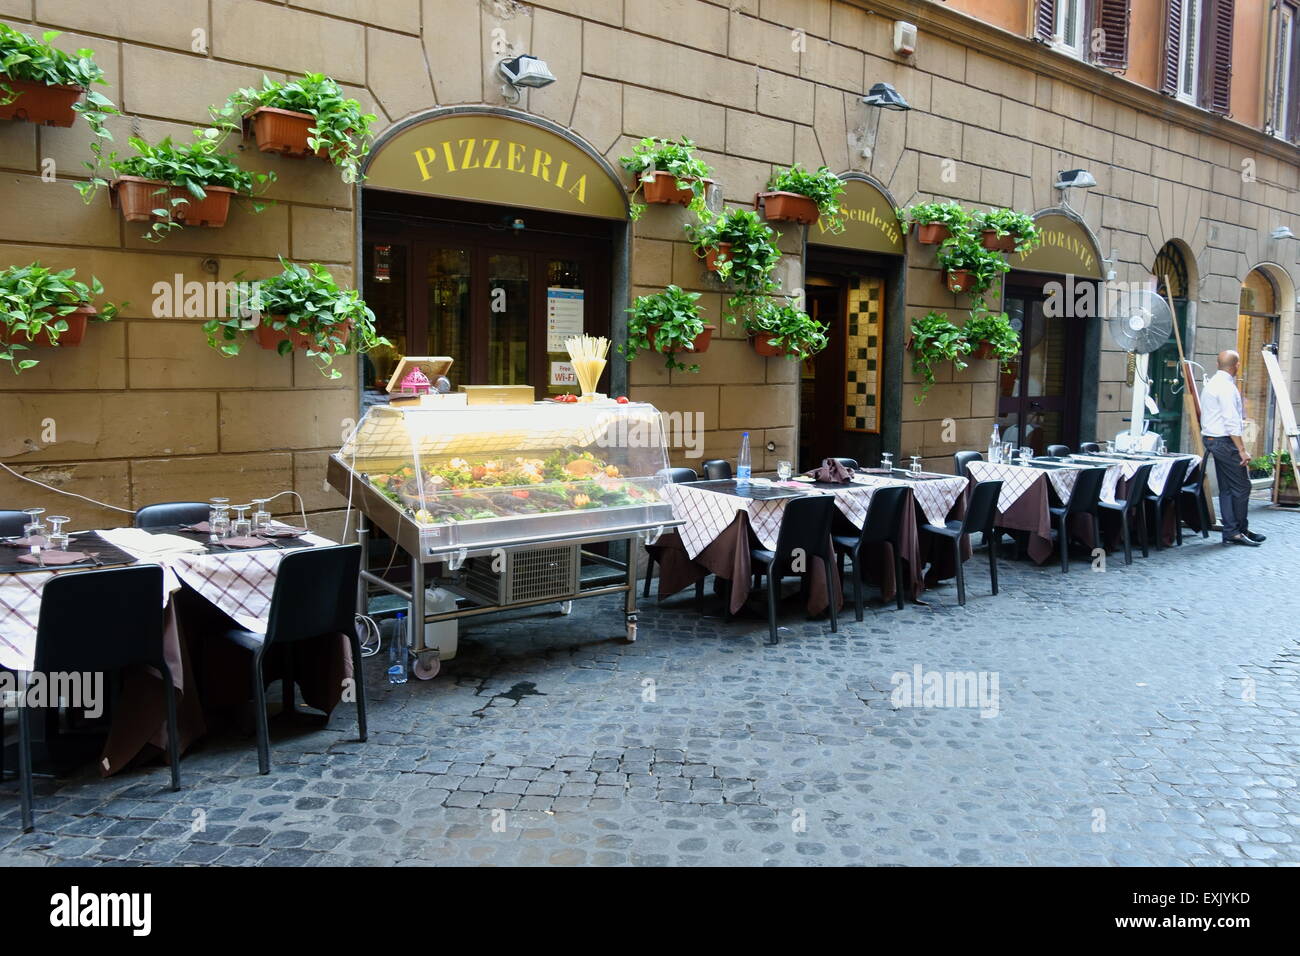 pizzeria in rome italy Stock Photo